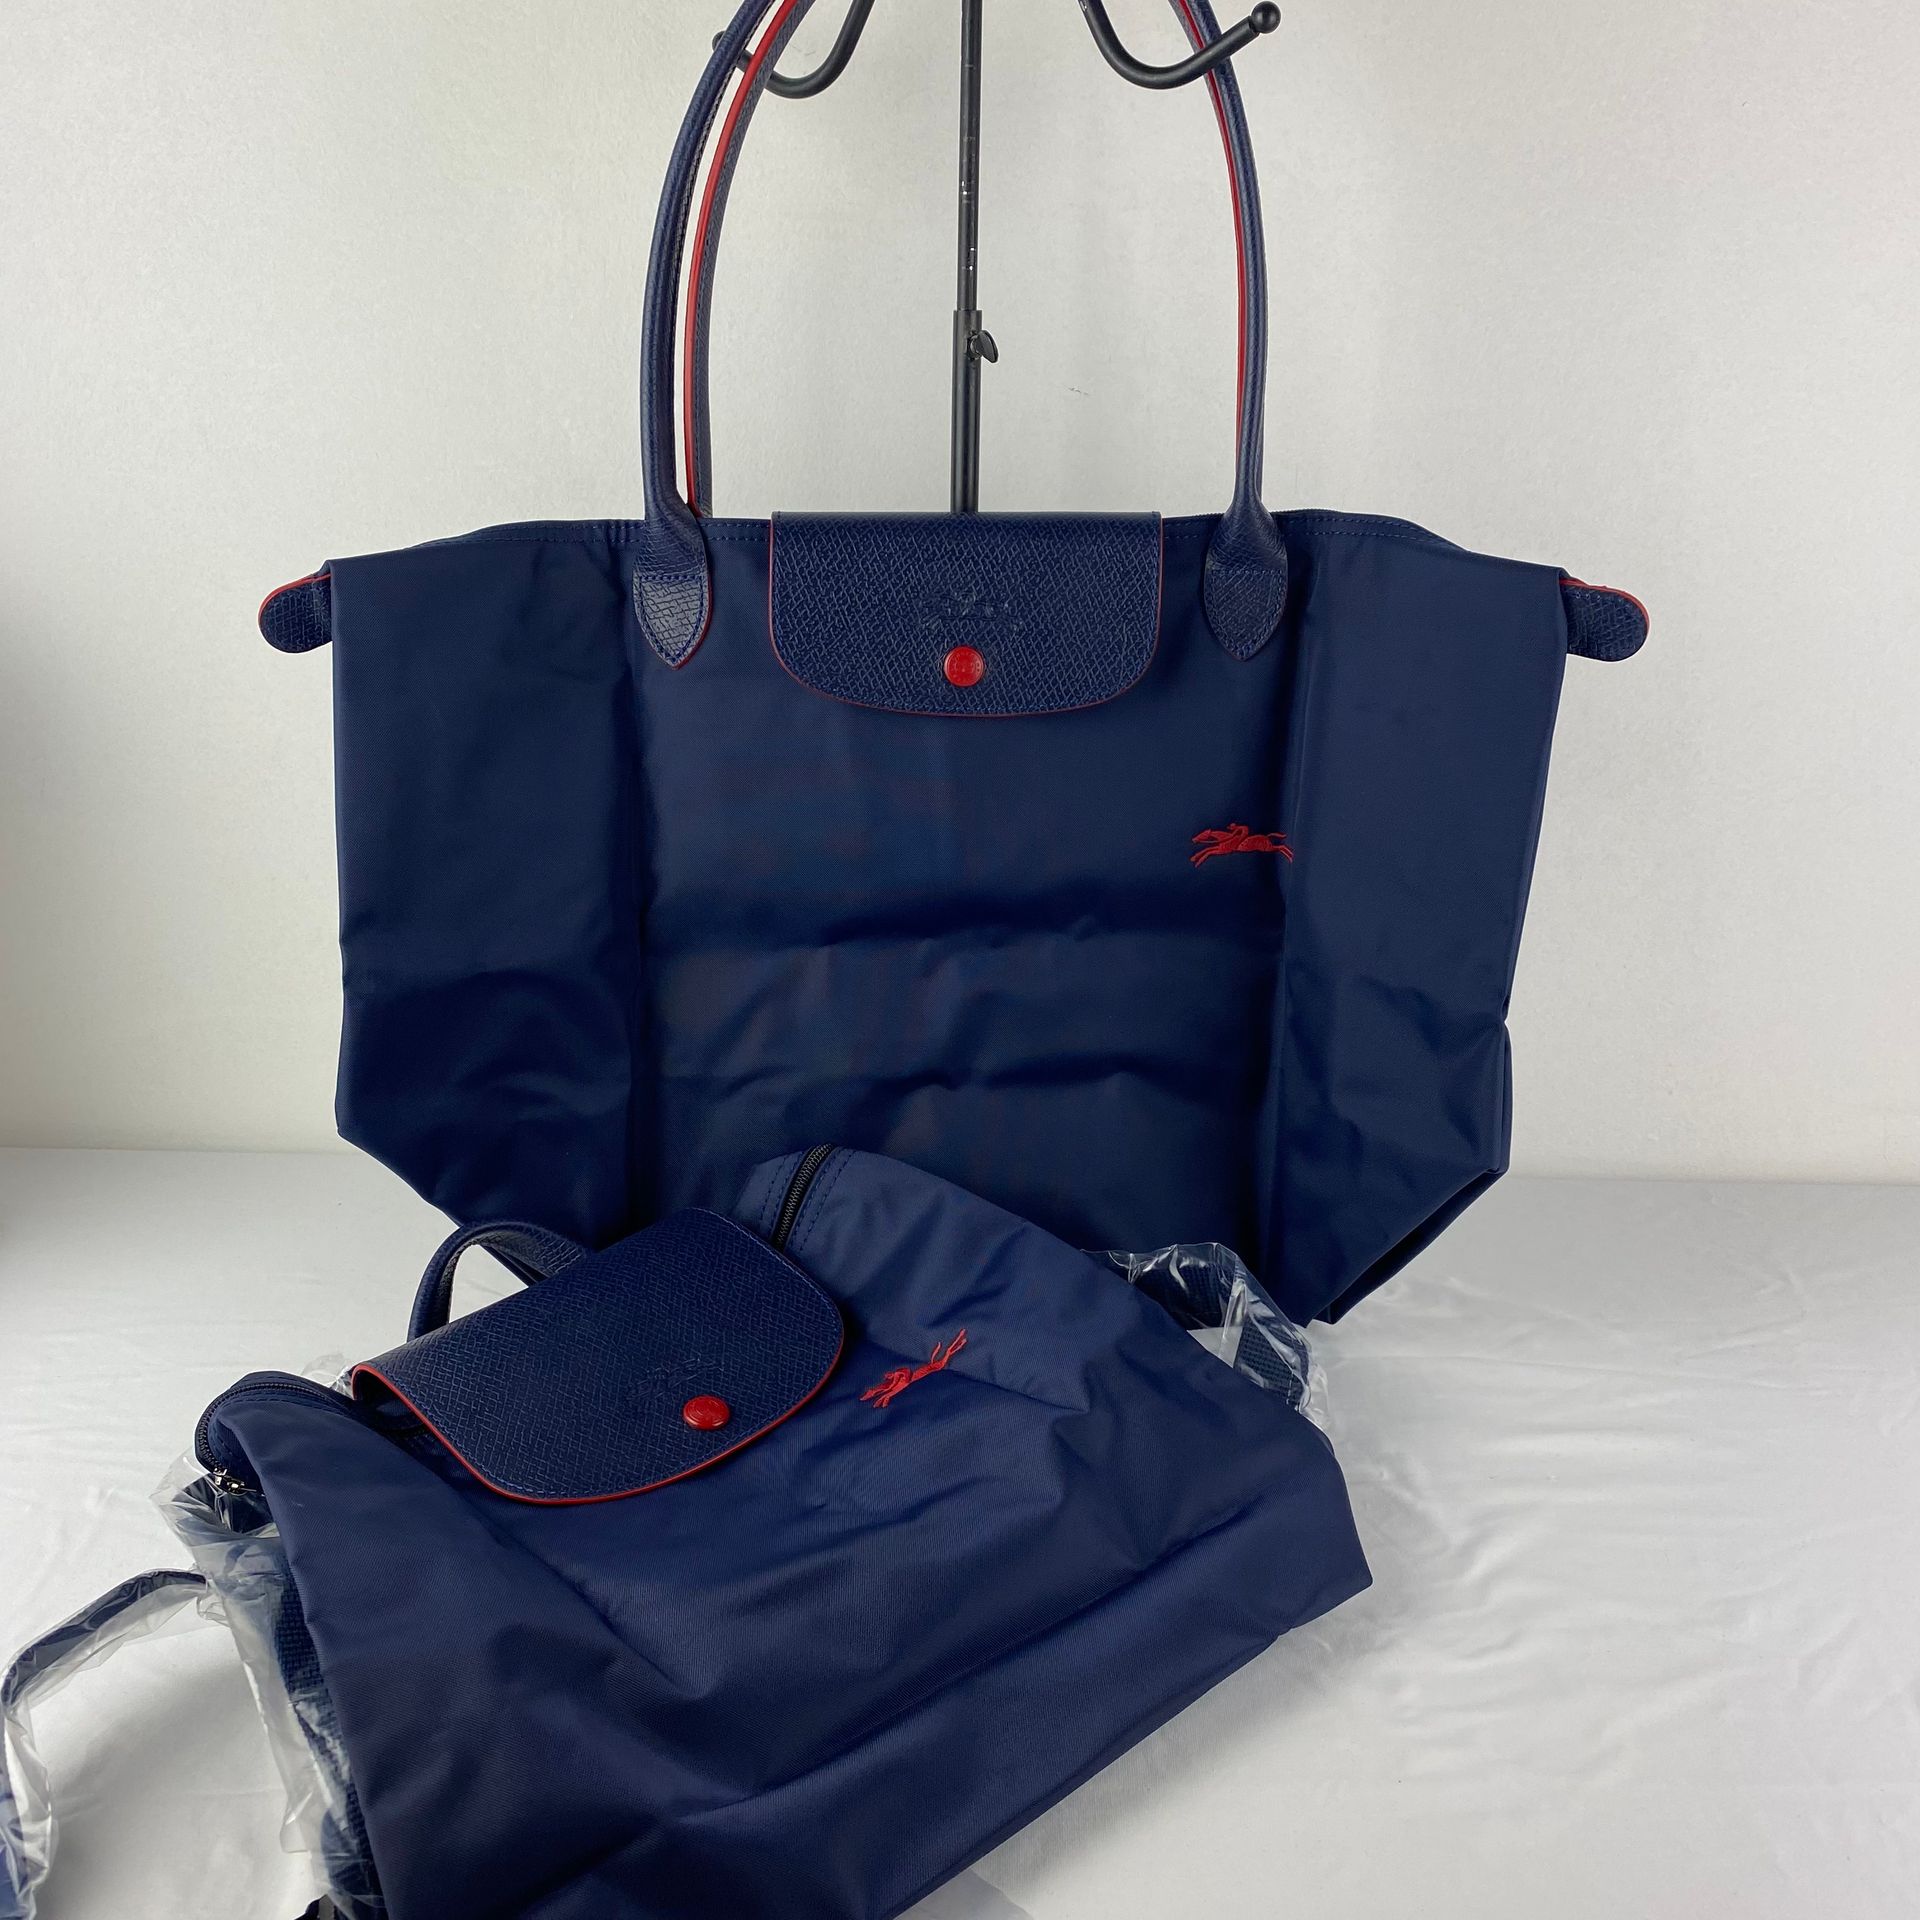 LONGCHAMP Set di 2 borse LONGCHAMP in tela e pelle, colore navy con profili ross&hellip;